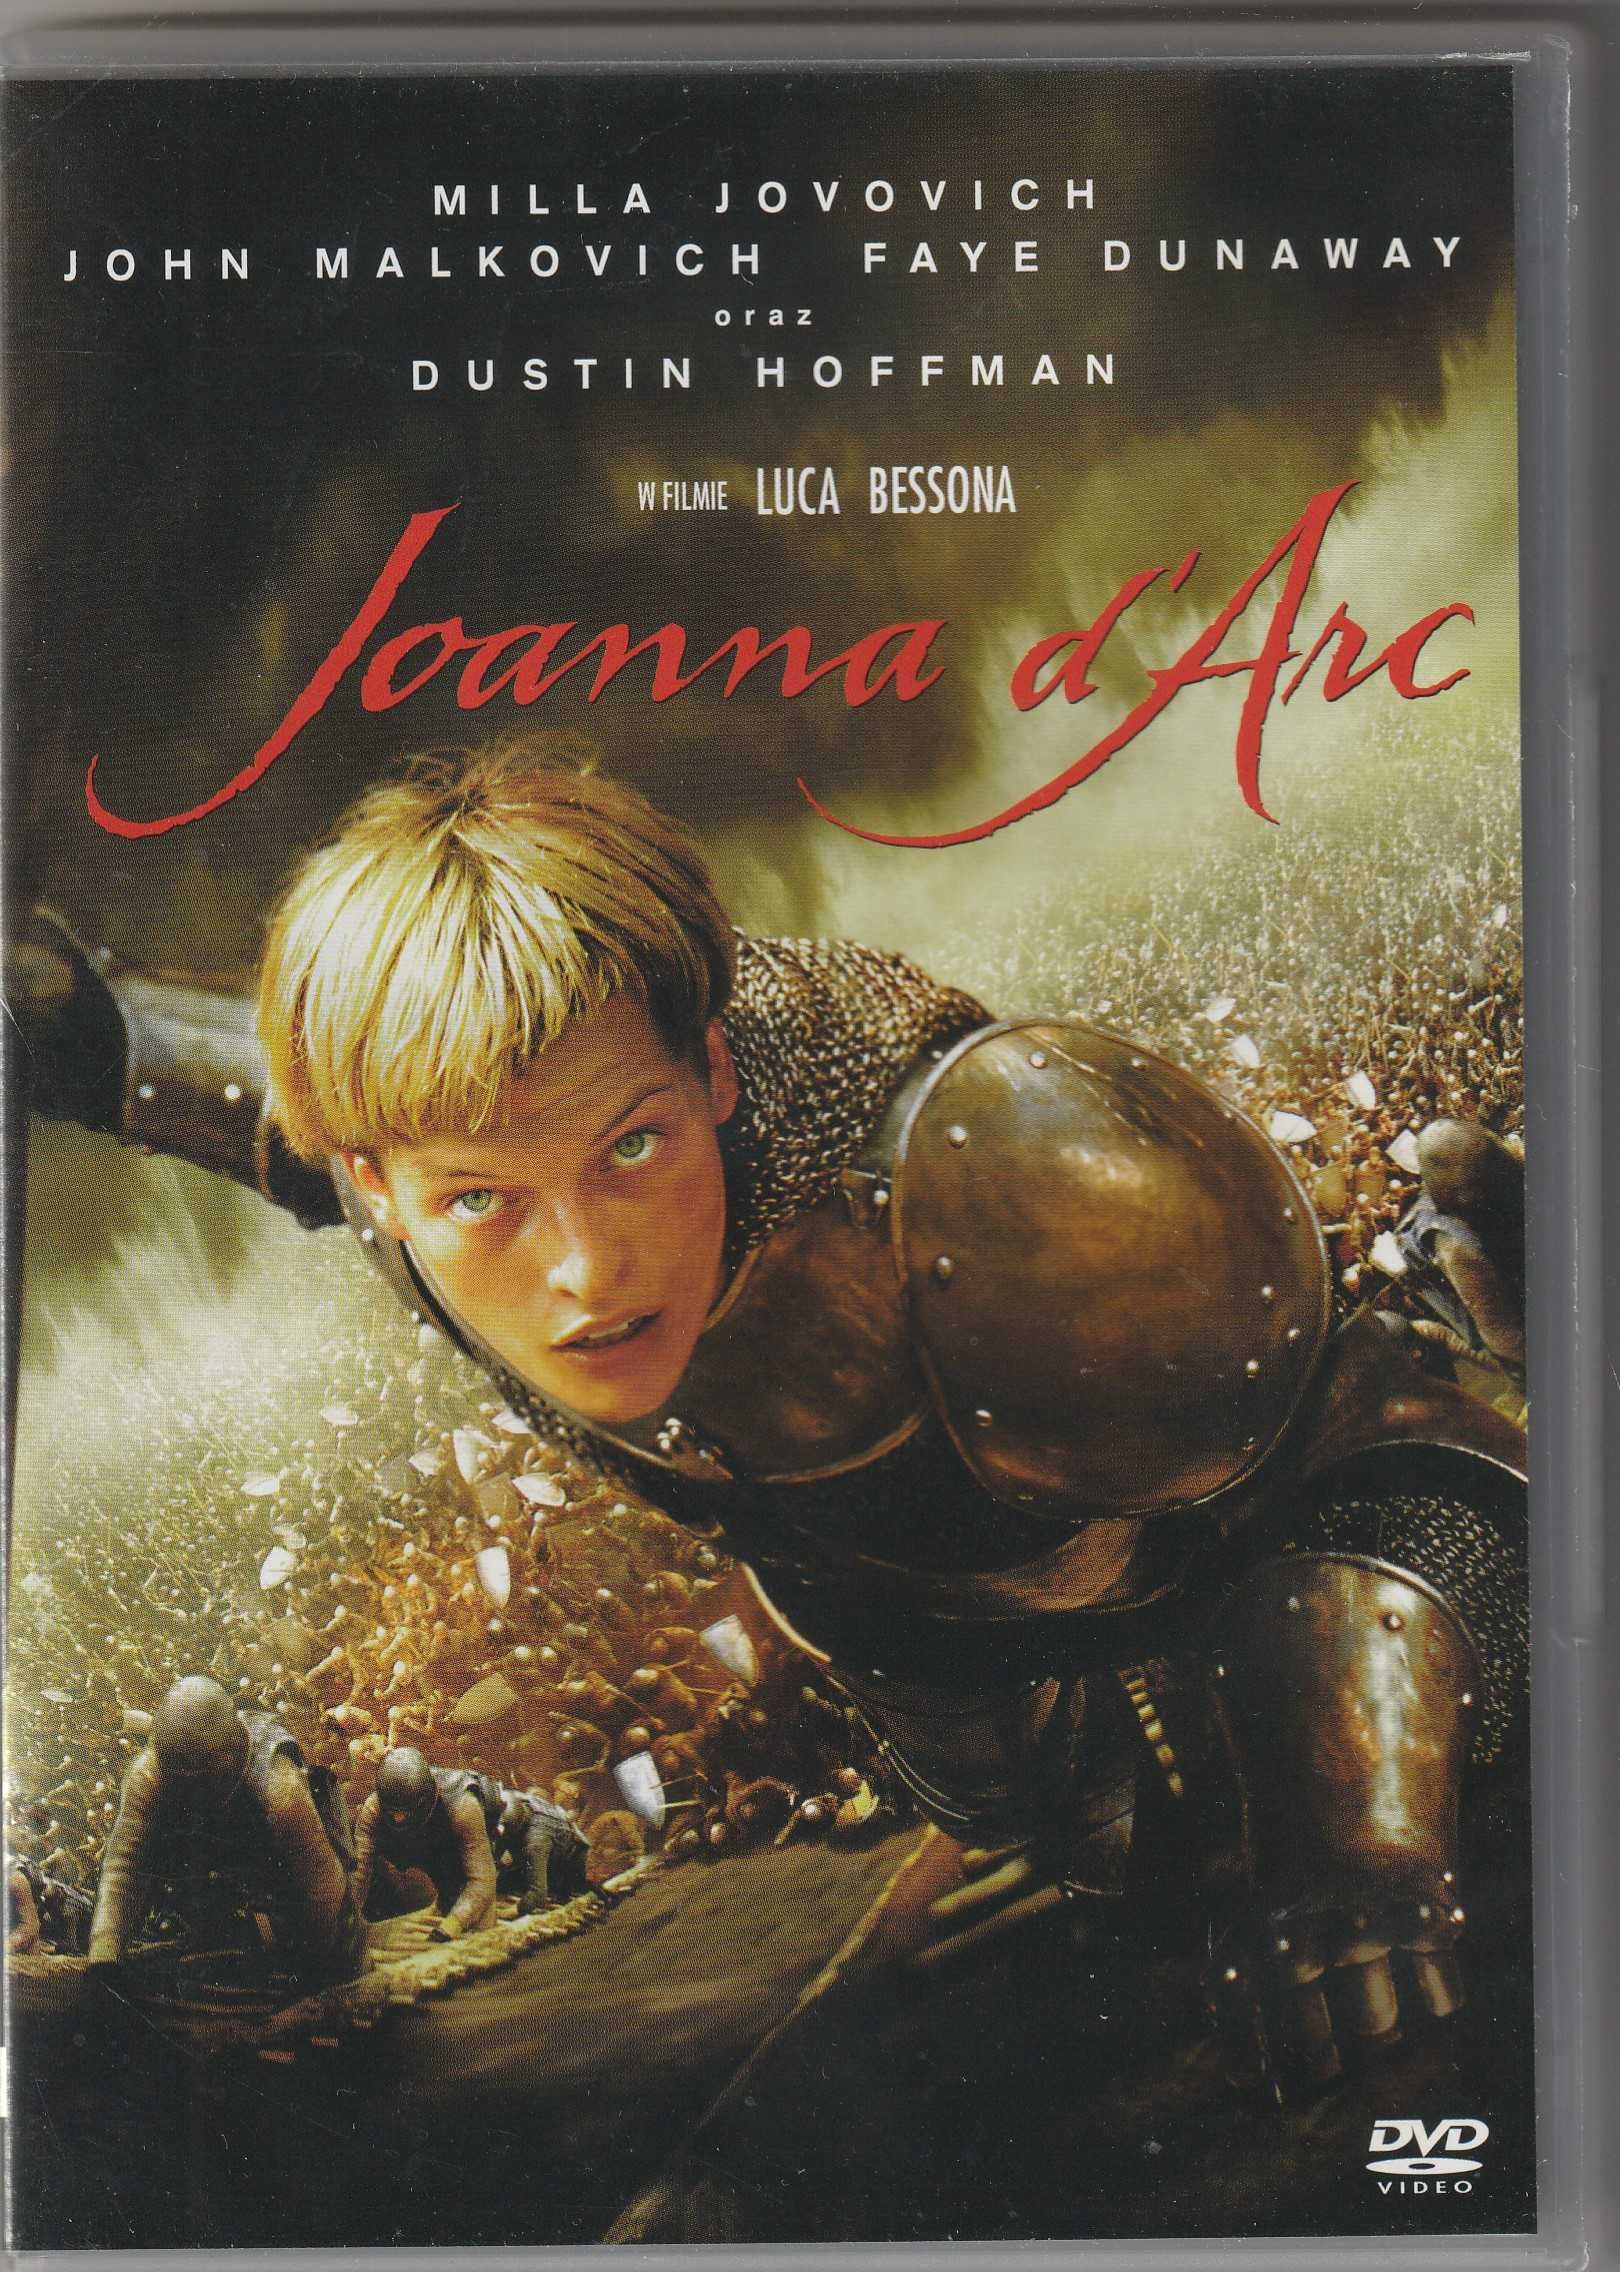 JOANNA D'ARC Milla Jovovich DVD